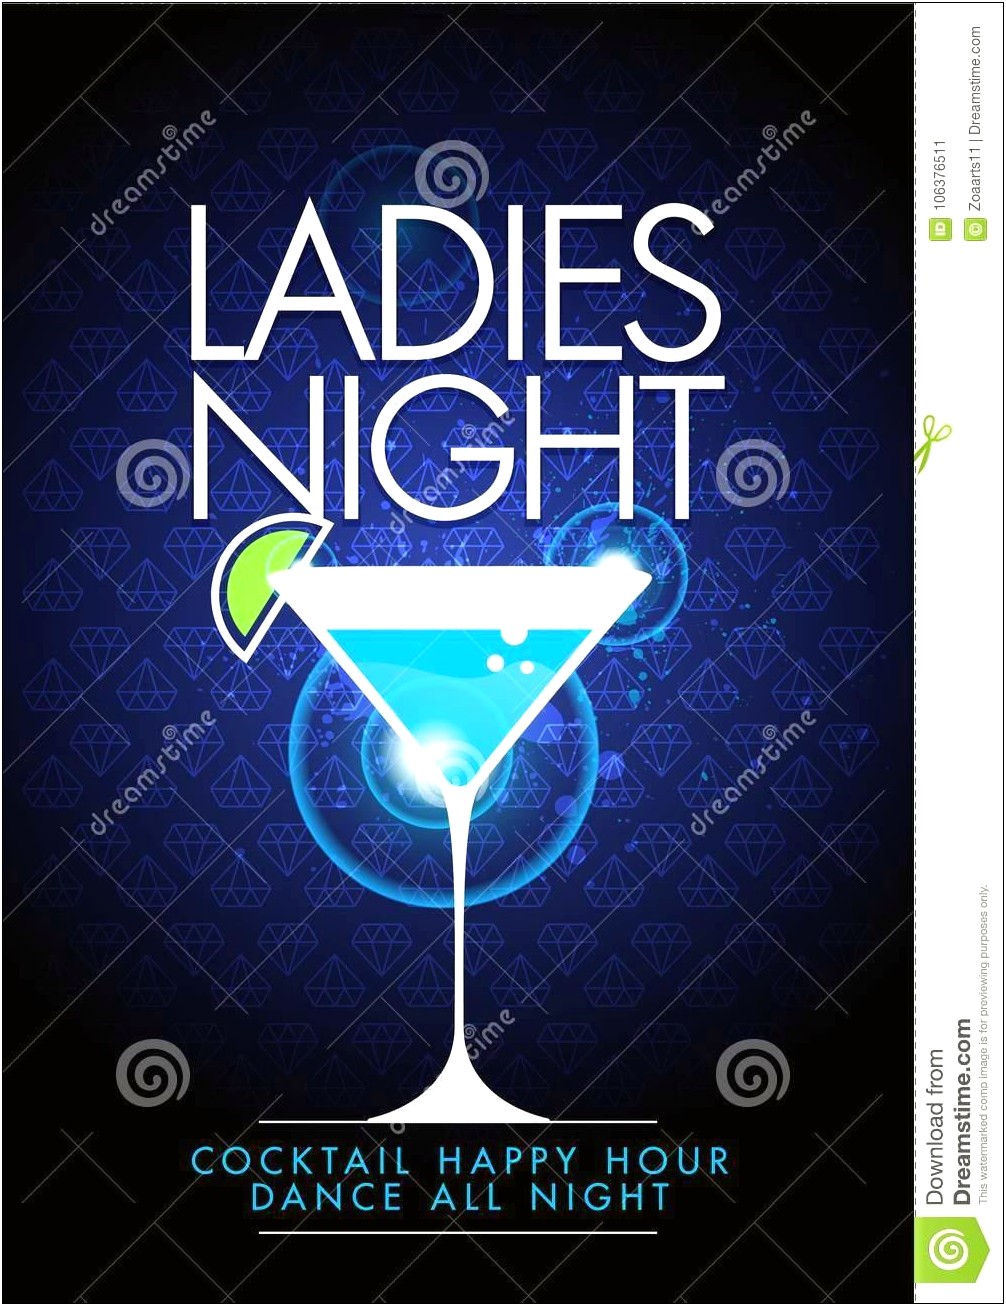 Free Ladies Night Flyer Templates Download